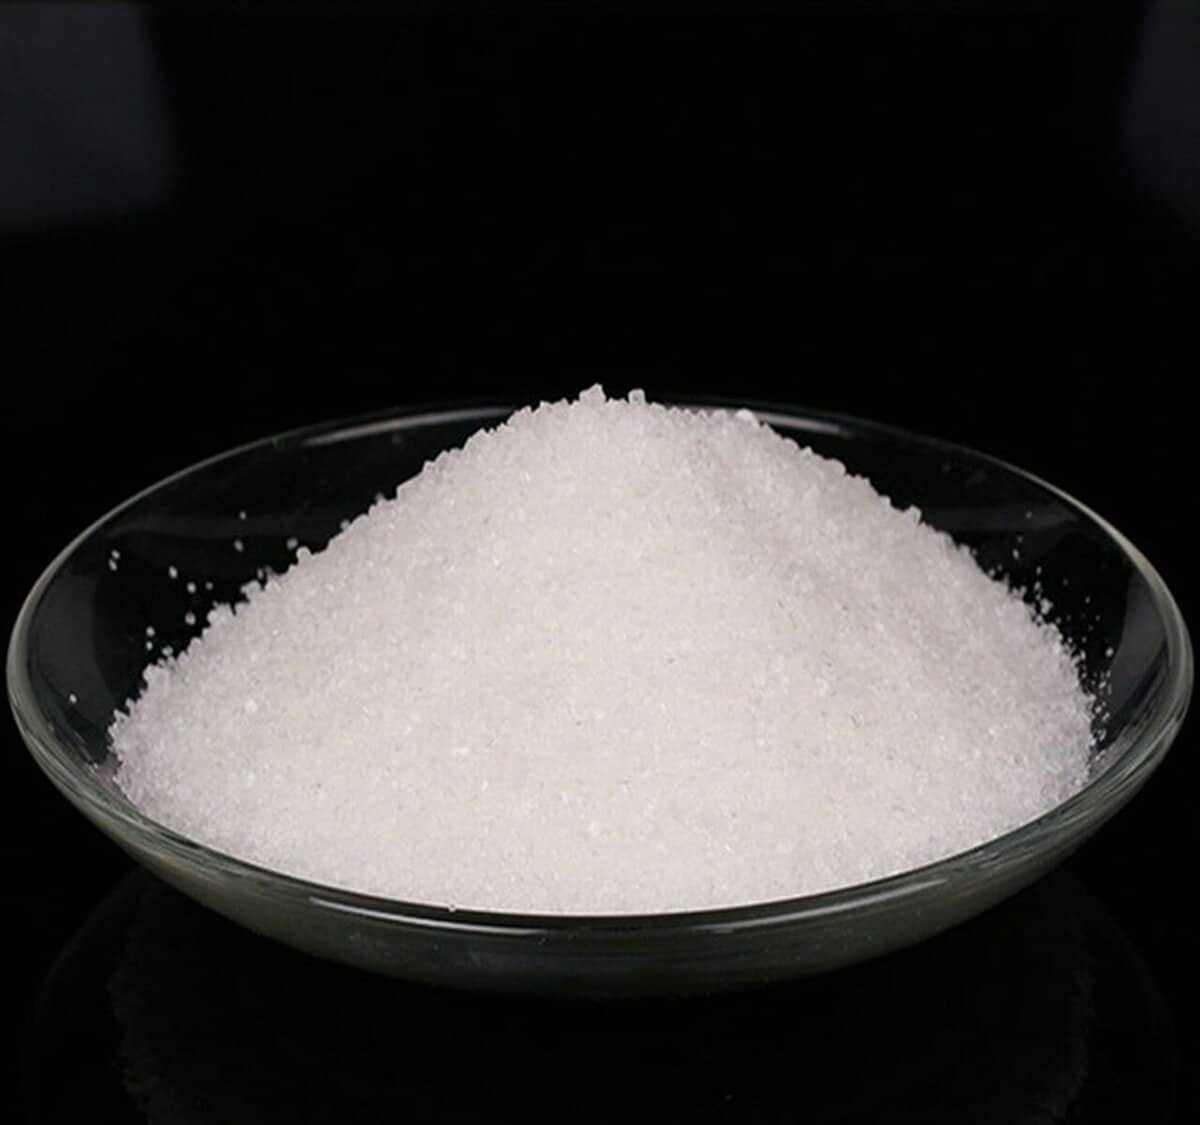 Potassium Bicarbonate and Water Mixture